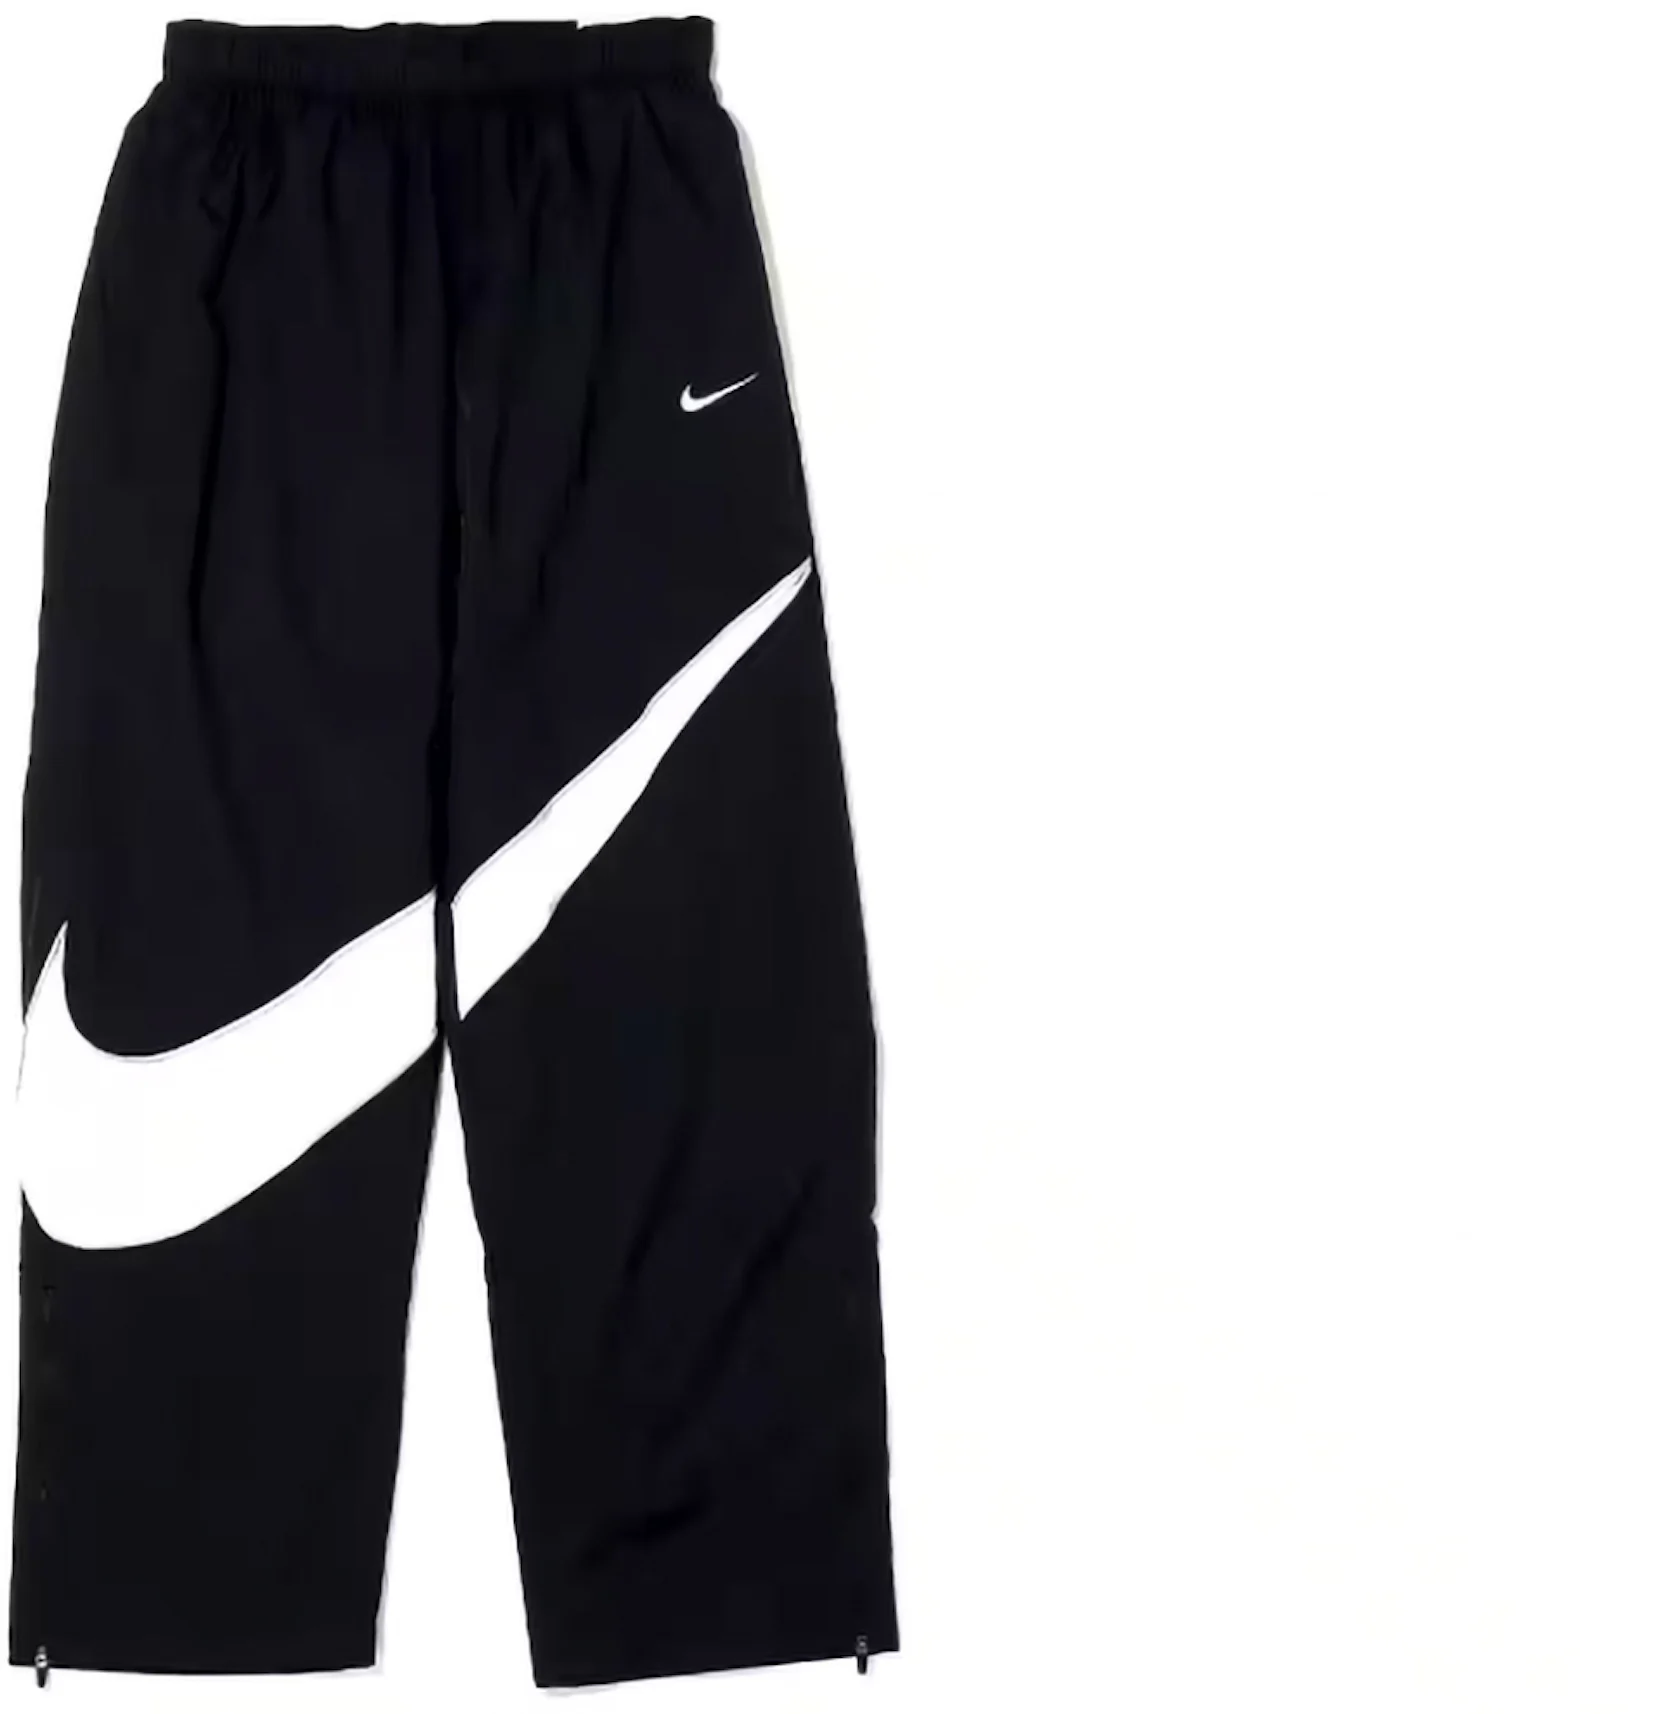 Nike Sportswear Big Swoosh Woven Pants (Asia Sizing)Black/White